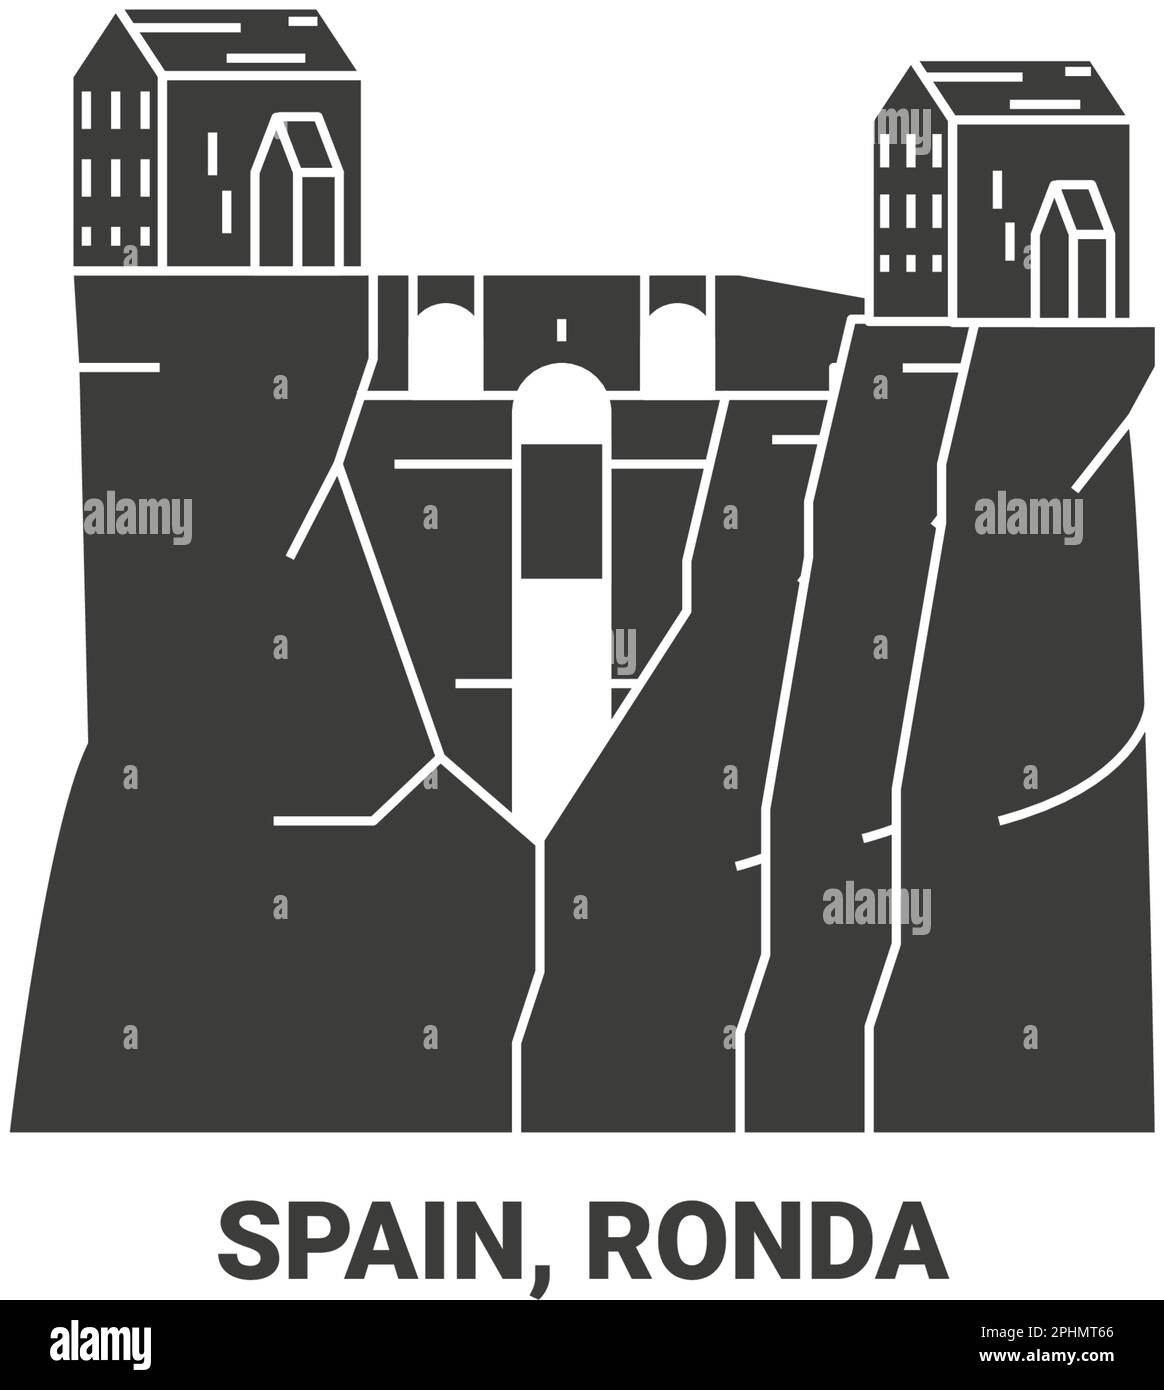 Spain, Ronda travel landmark vector illustration Stock Vector